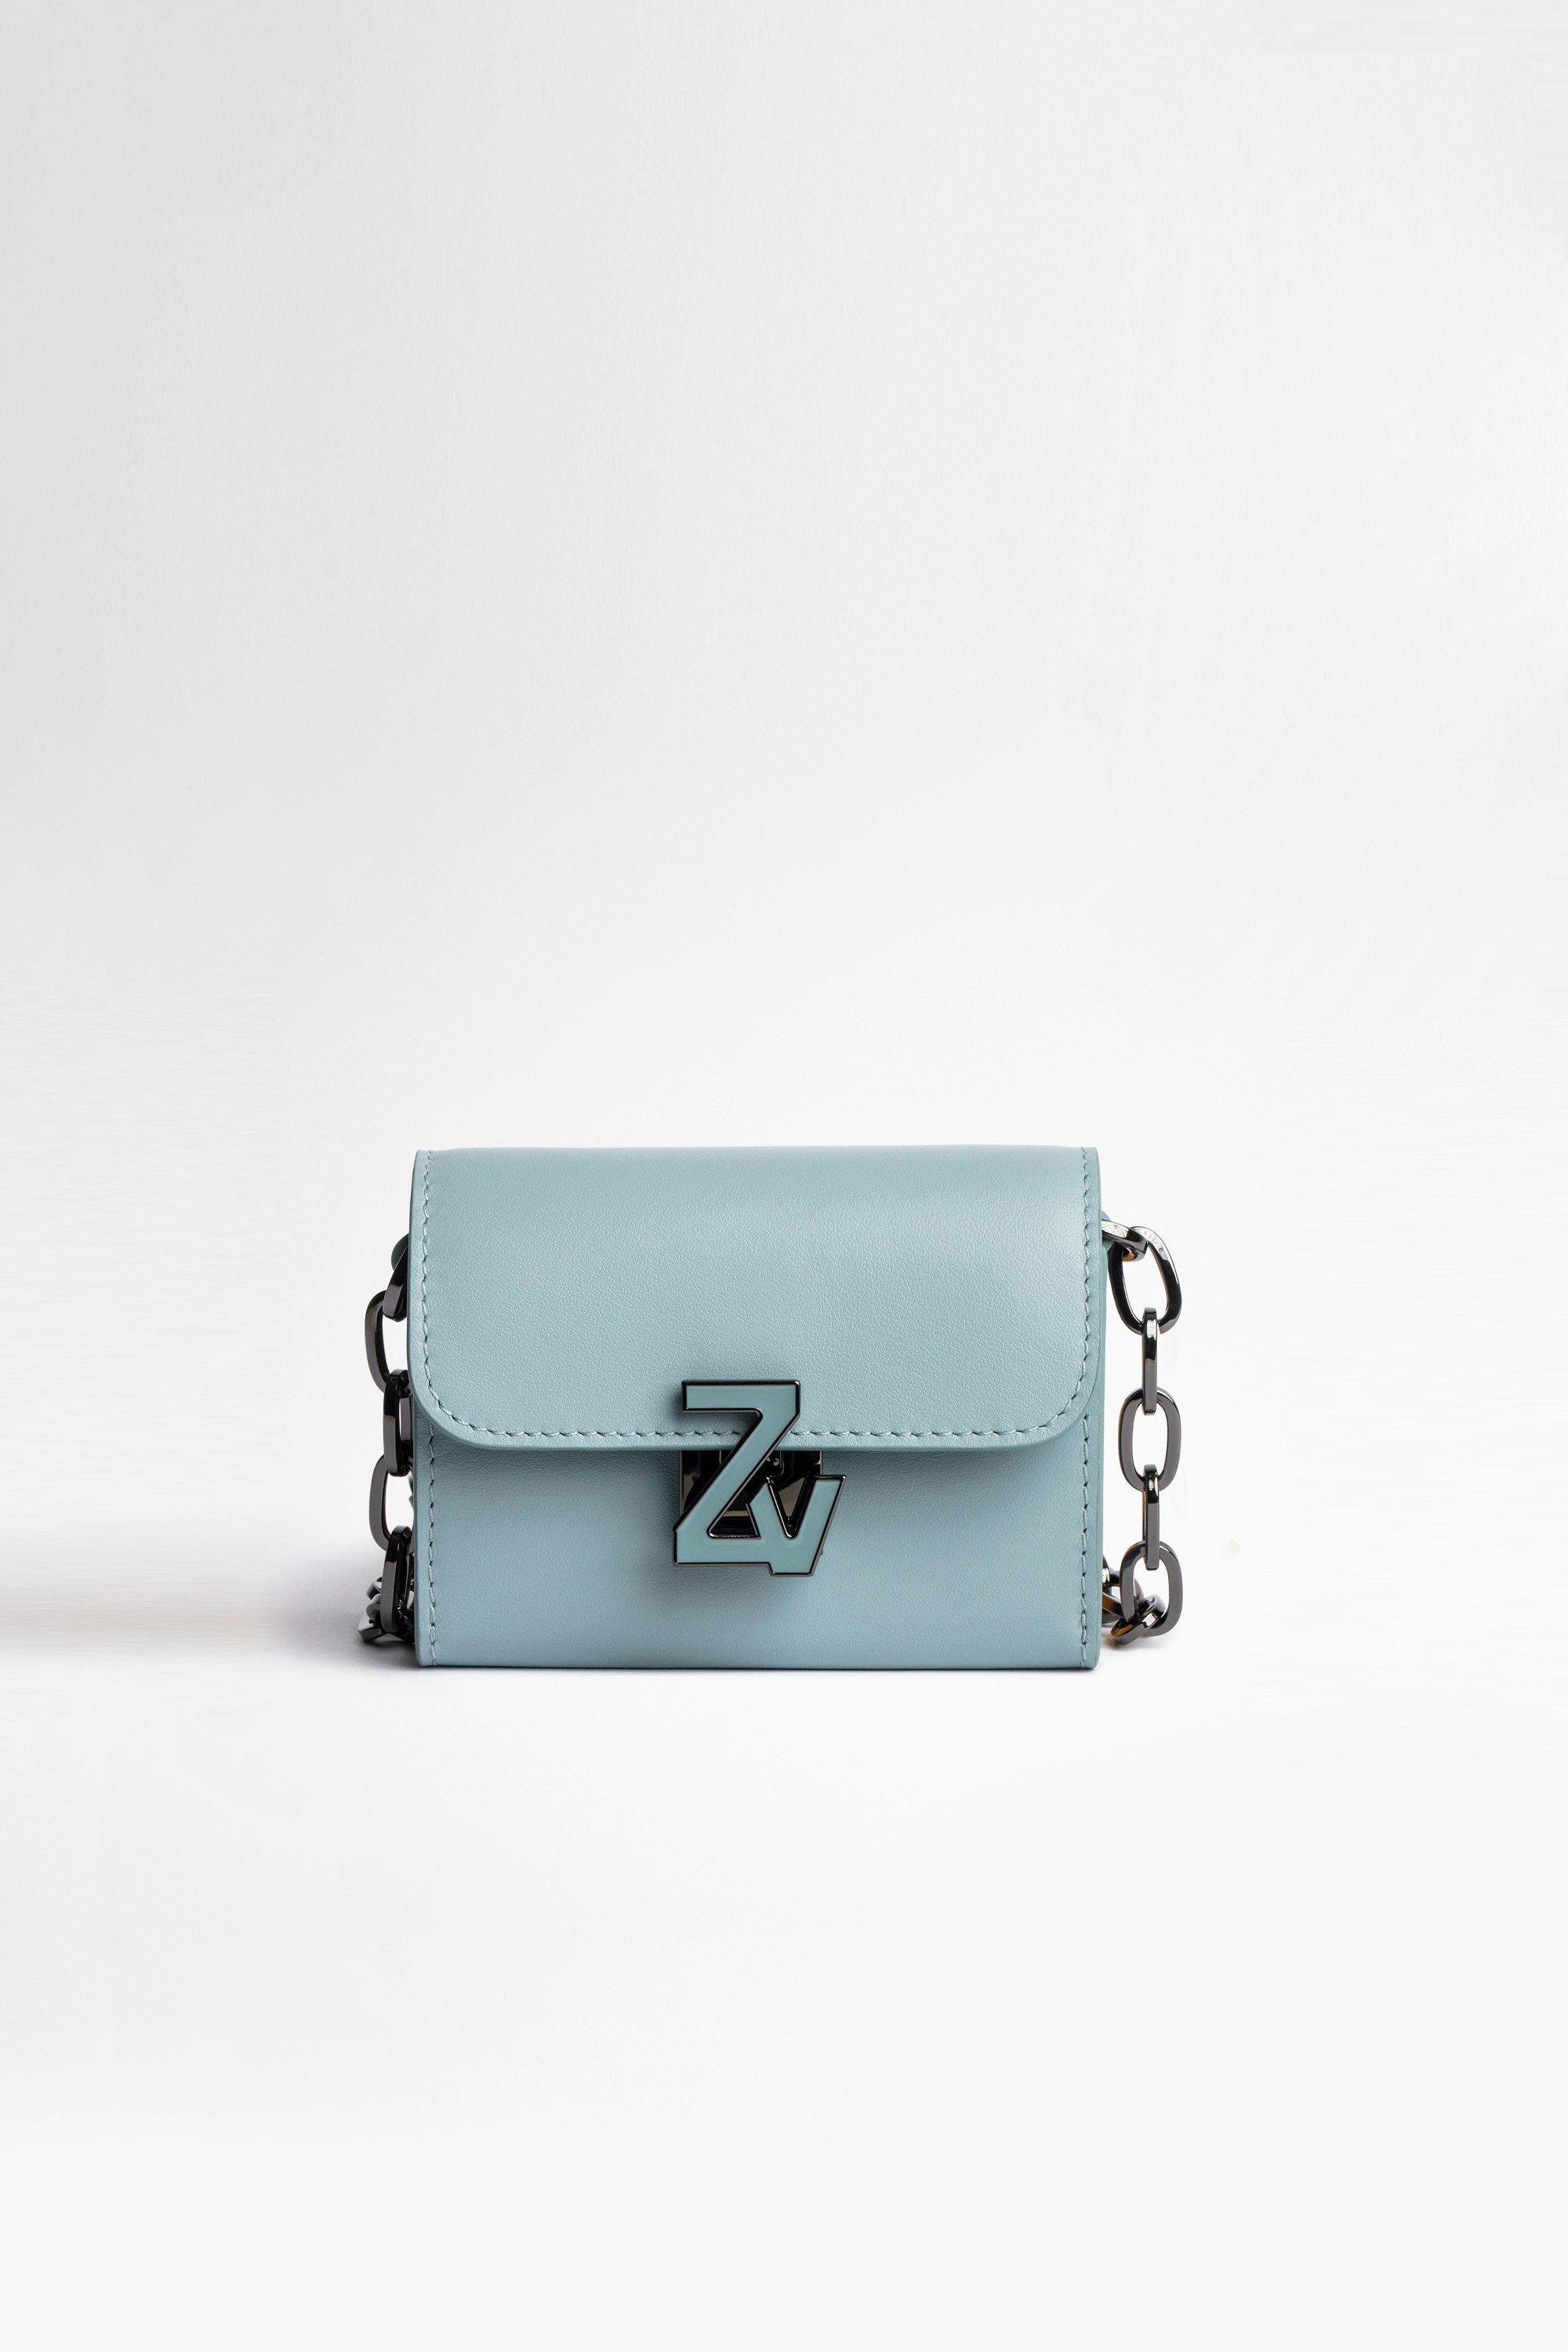 Damentasche Wallet ZV Initiale Le Tiny Unchained Kleines Portemonnaie aus himmelblauem Leder für Damen